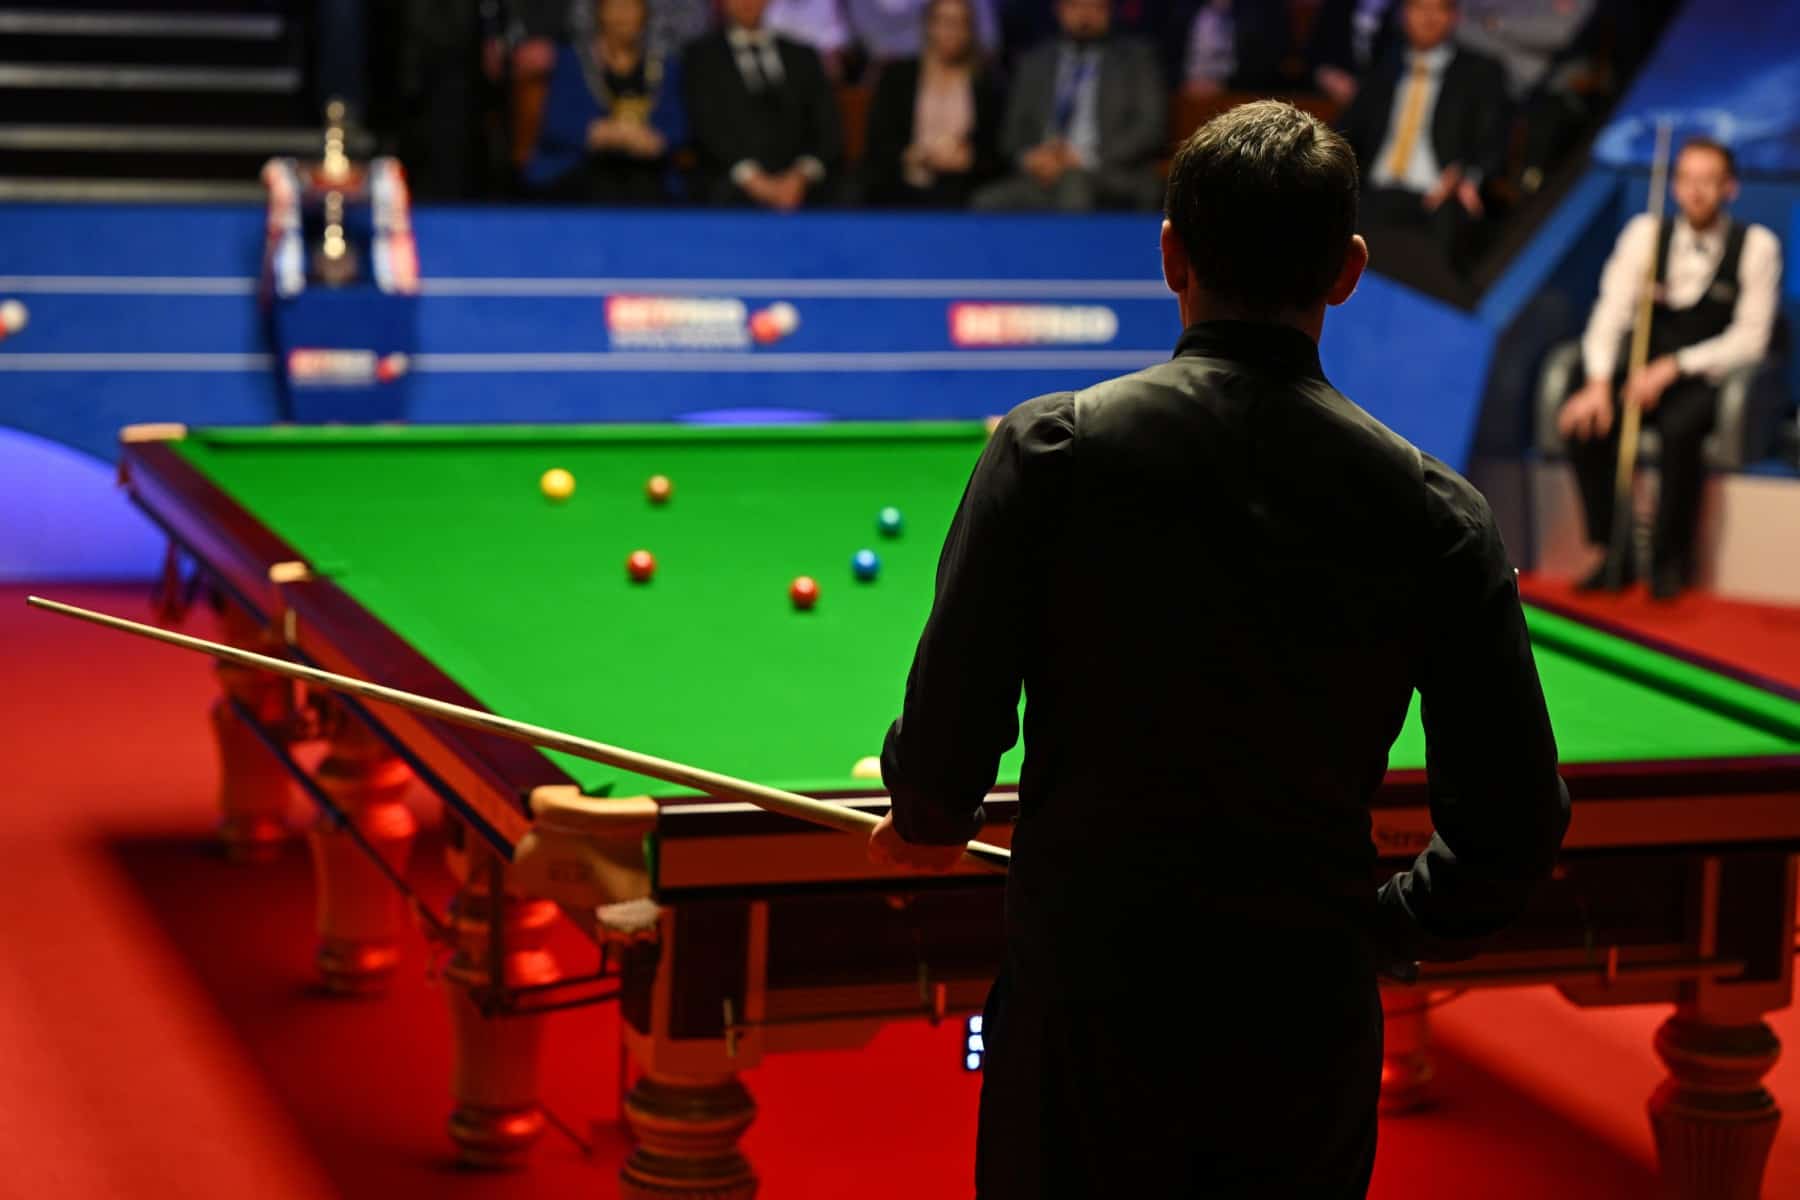 Saudi Arabia to host Under-21 World Snooker Championship in 2023